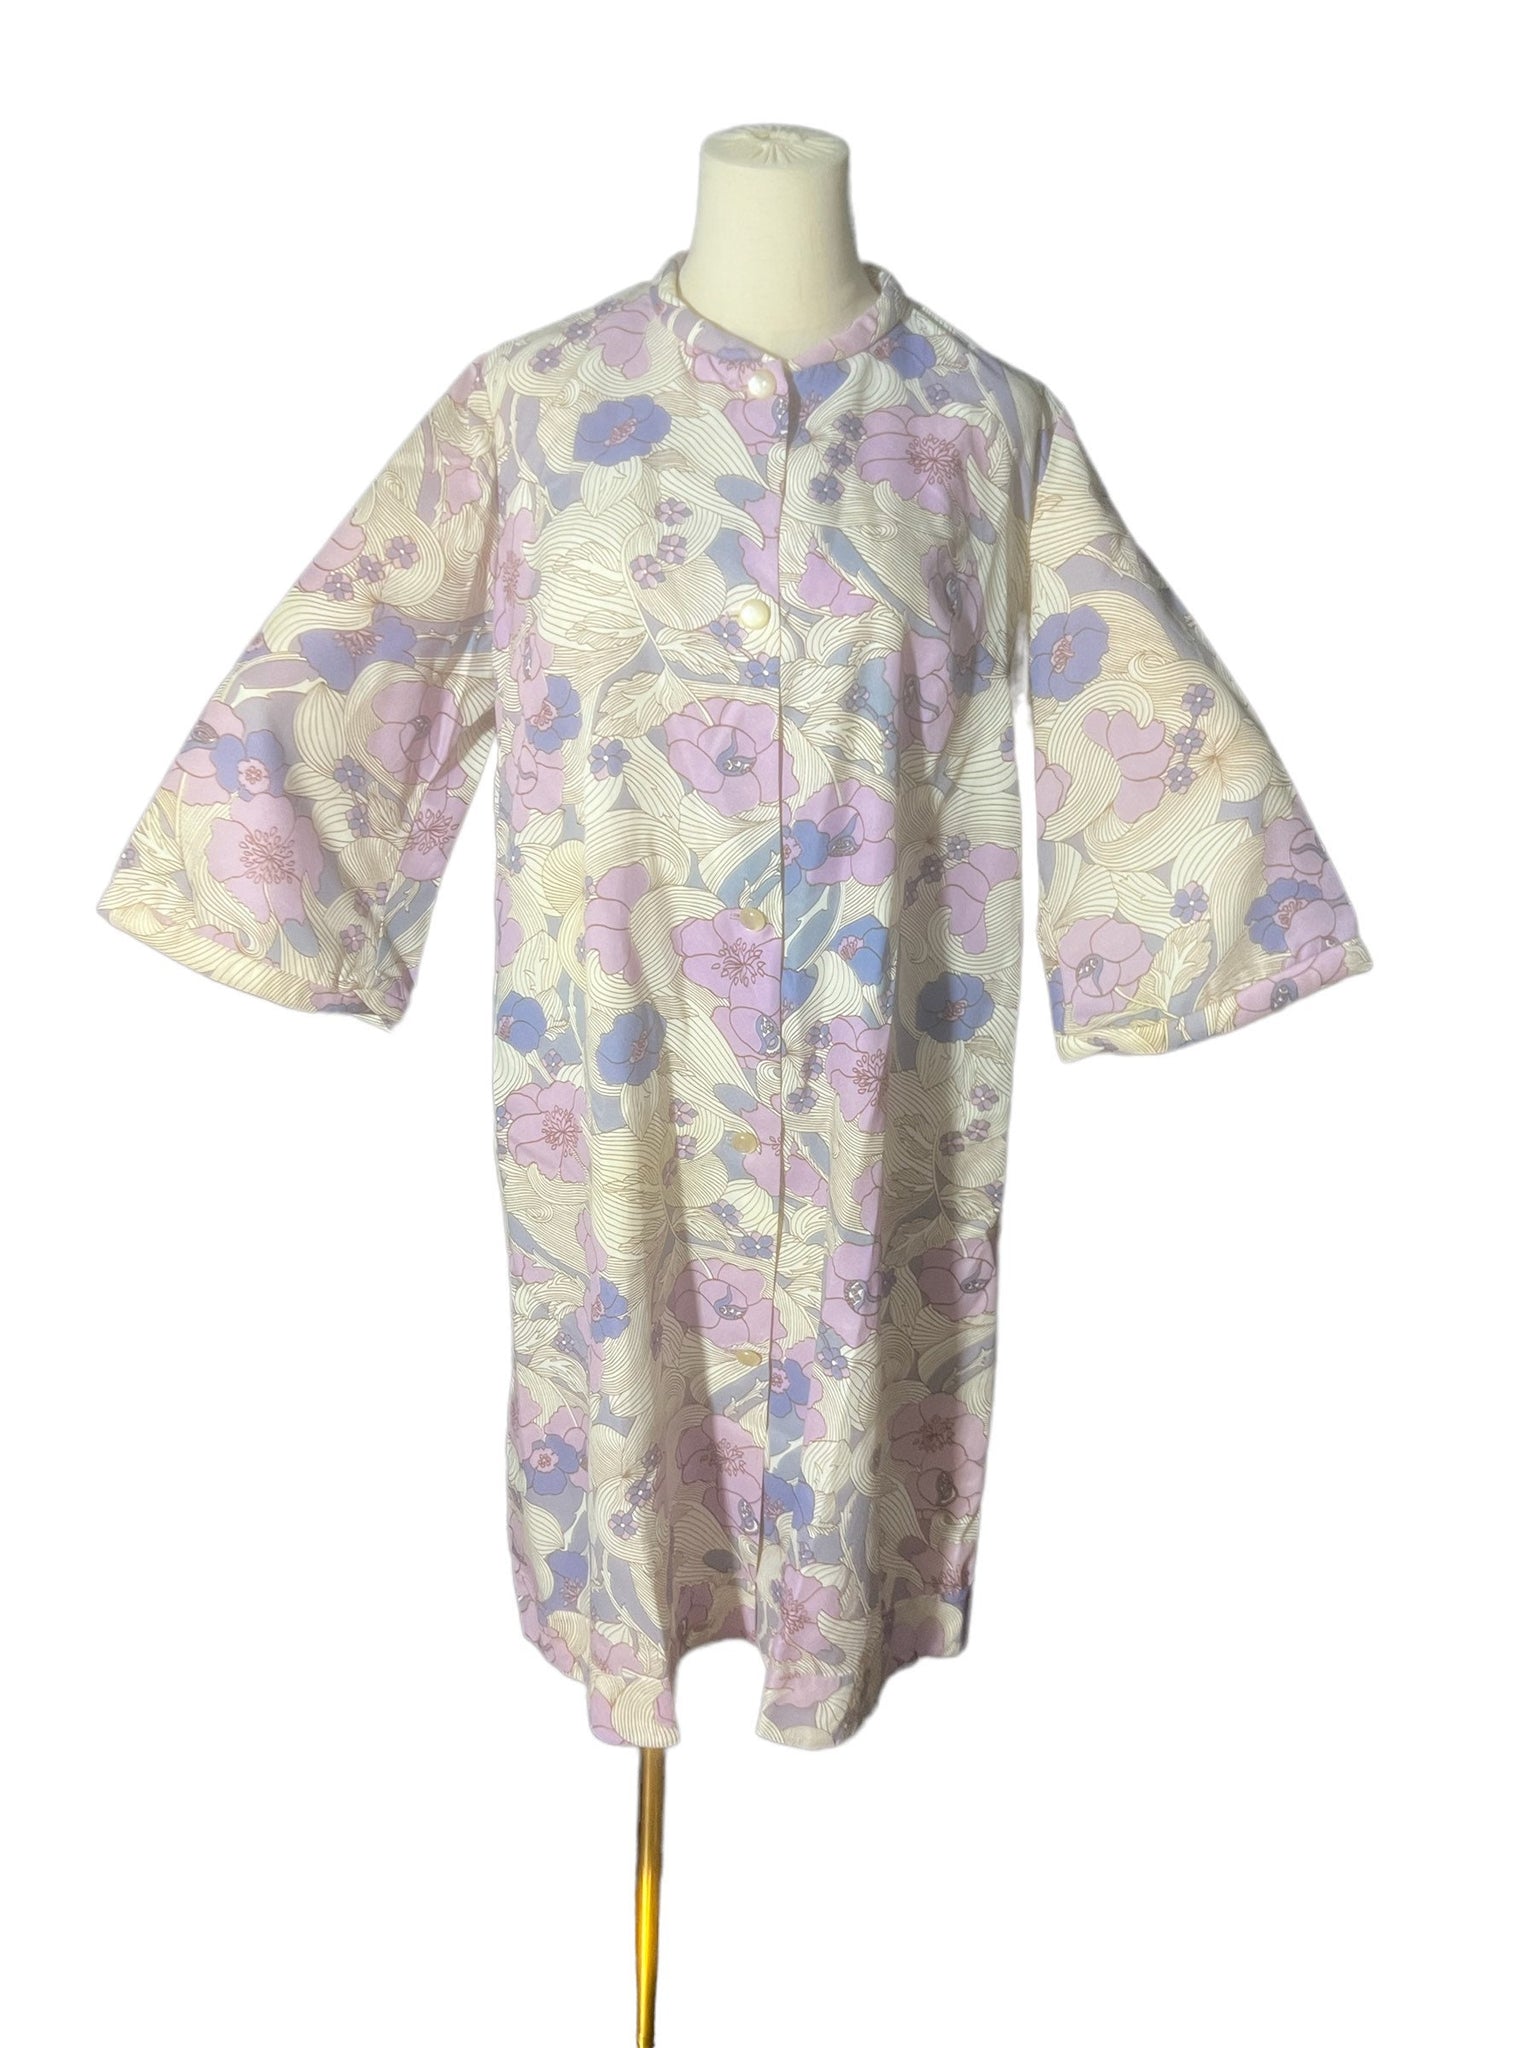 Vintage 70's Say-Lu robe lounge dress M